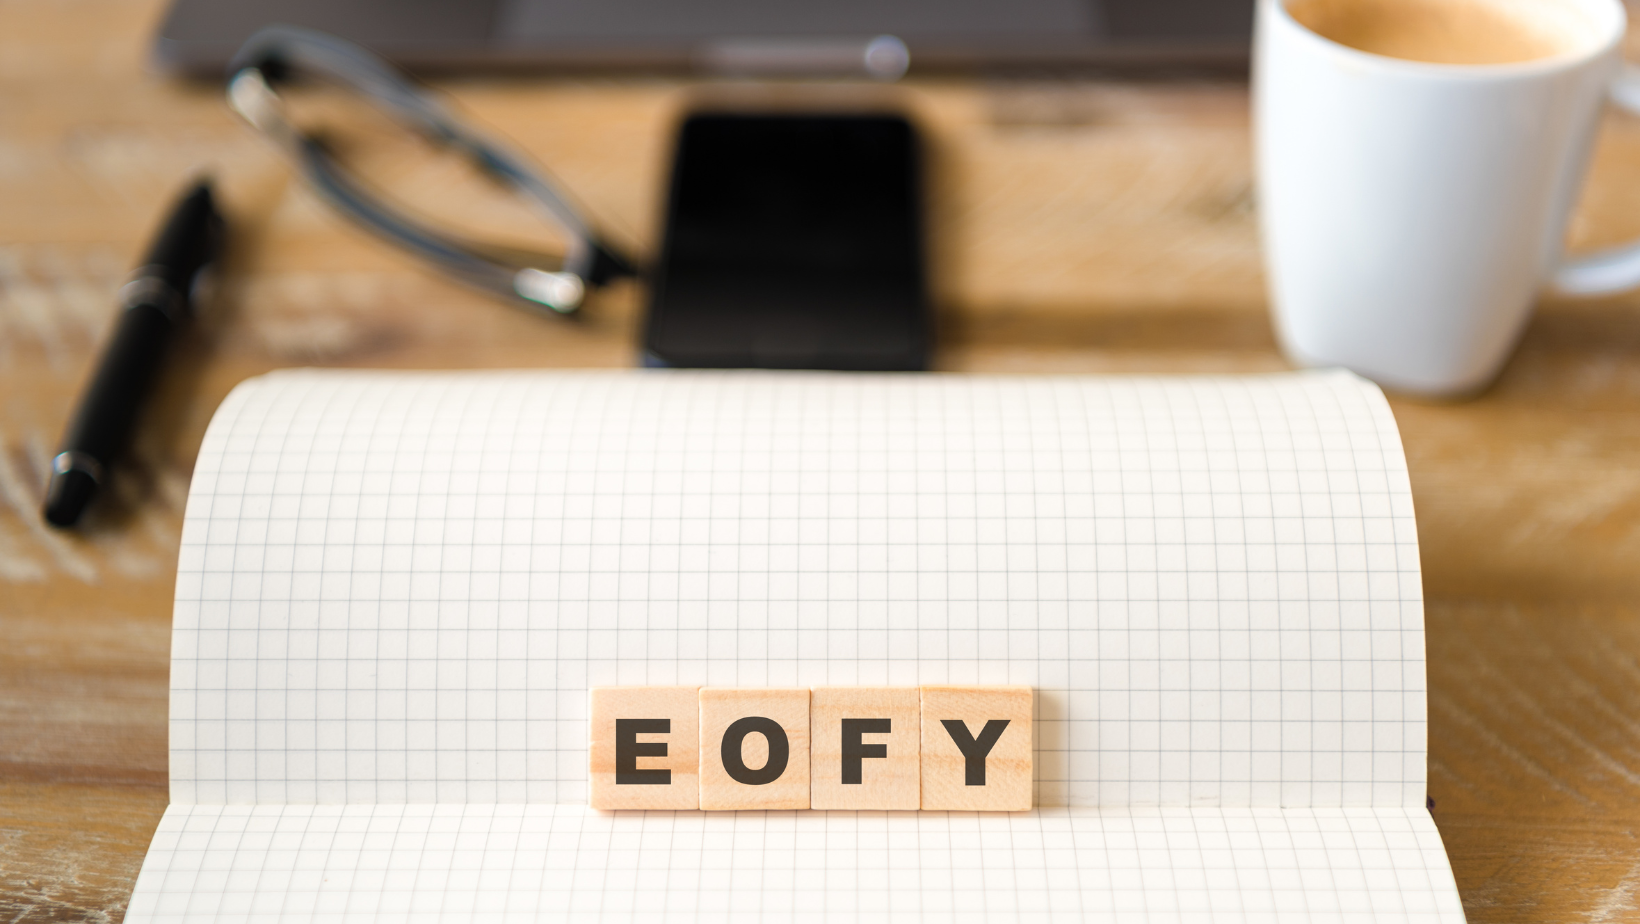 The word eofy is written in wooden blocks on a notebook.